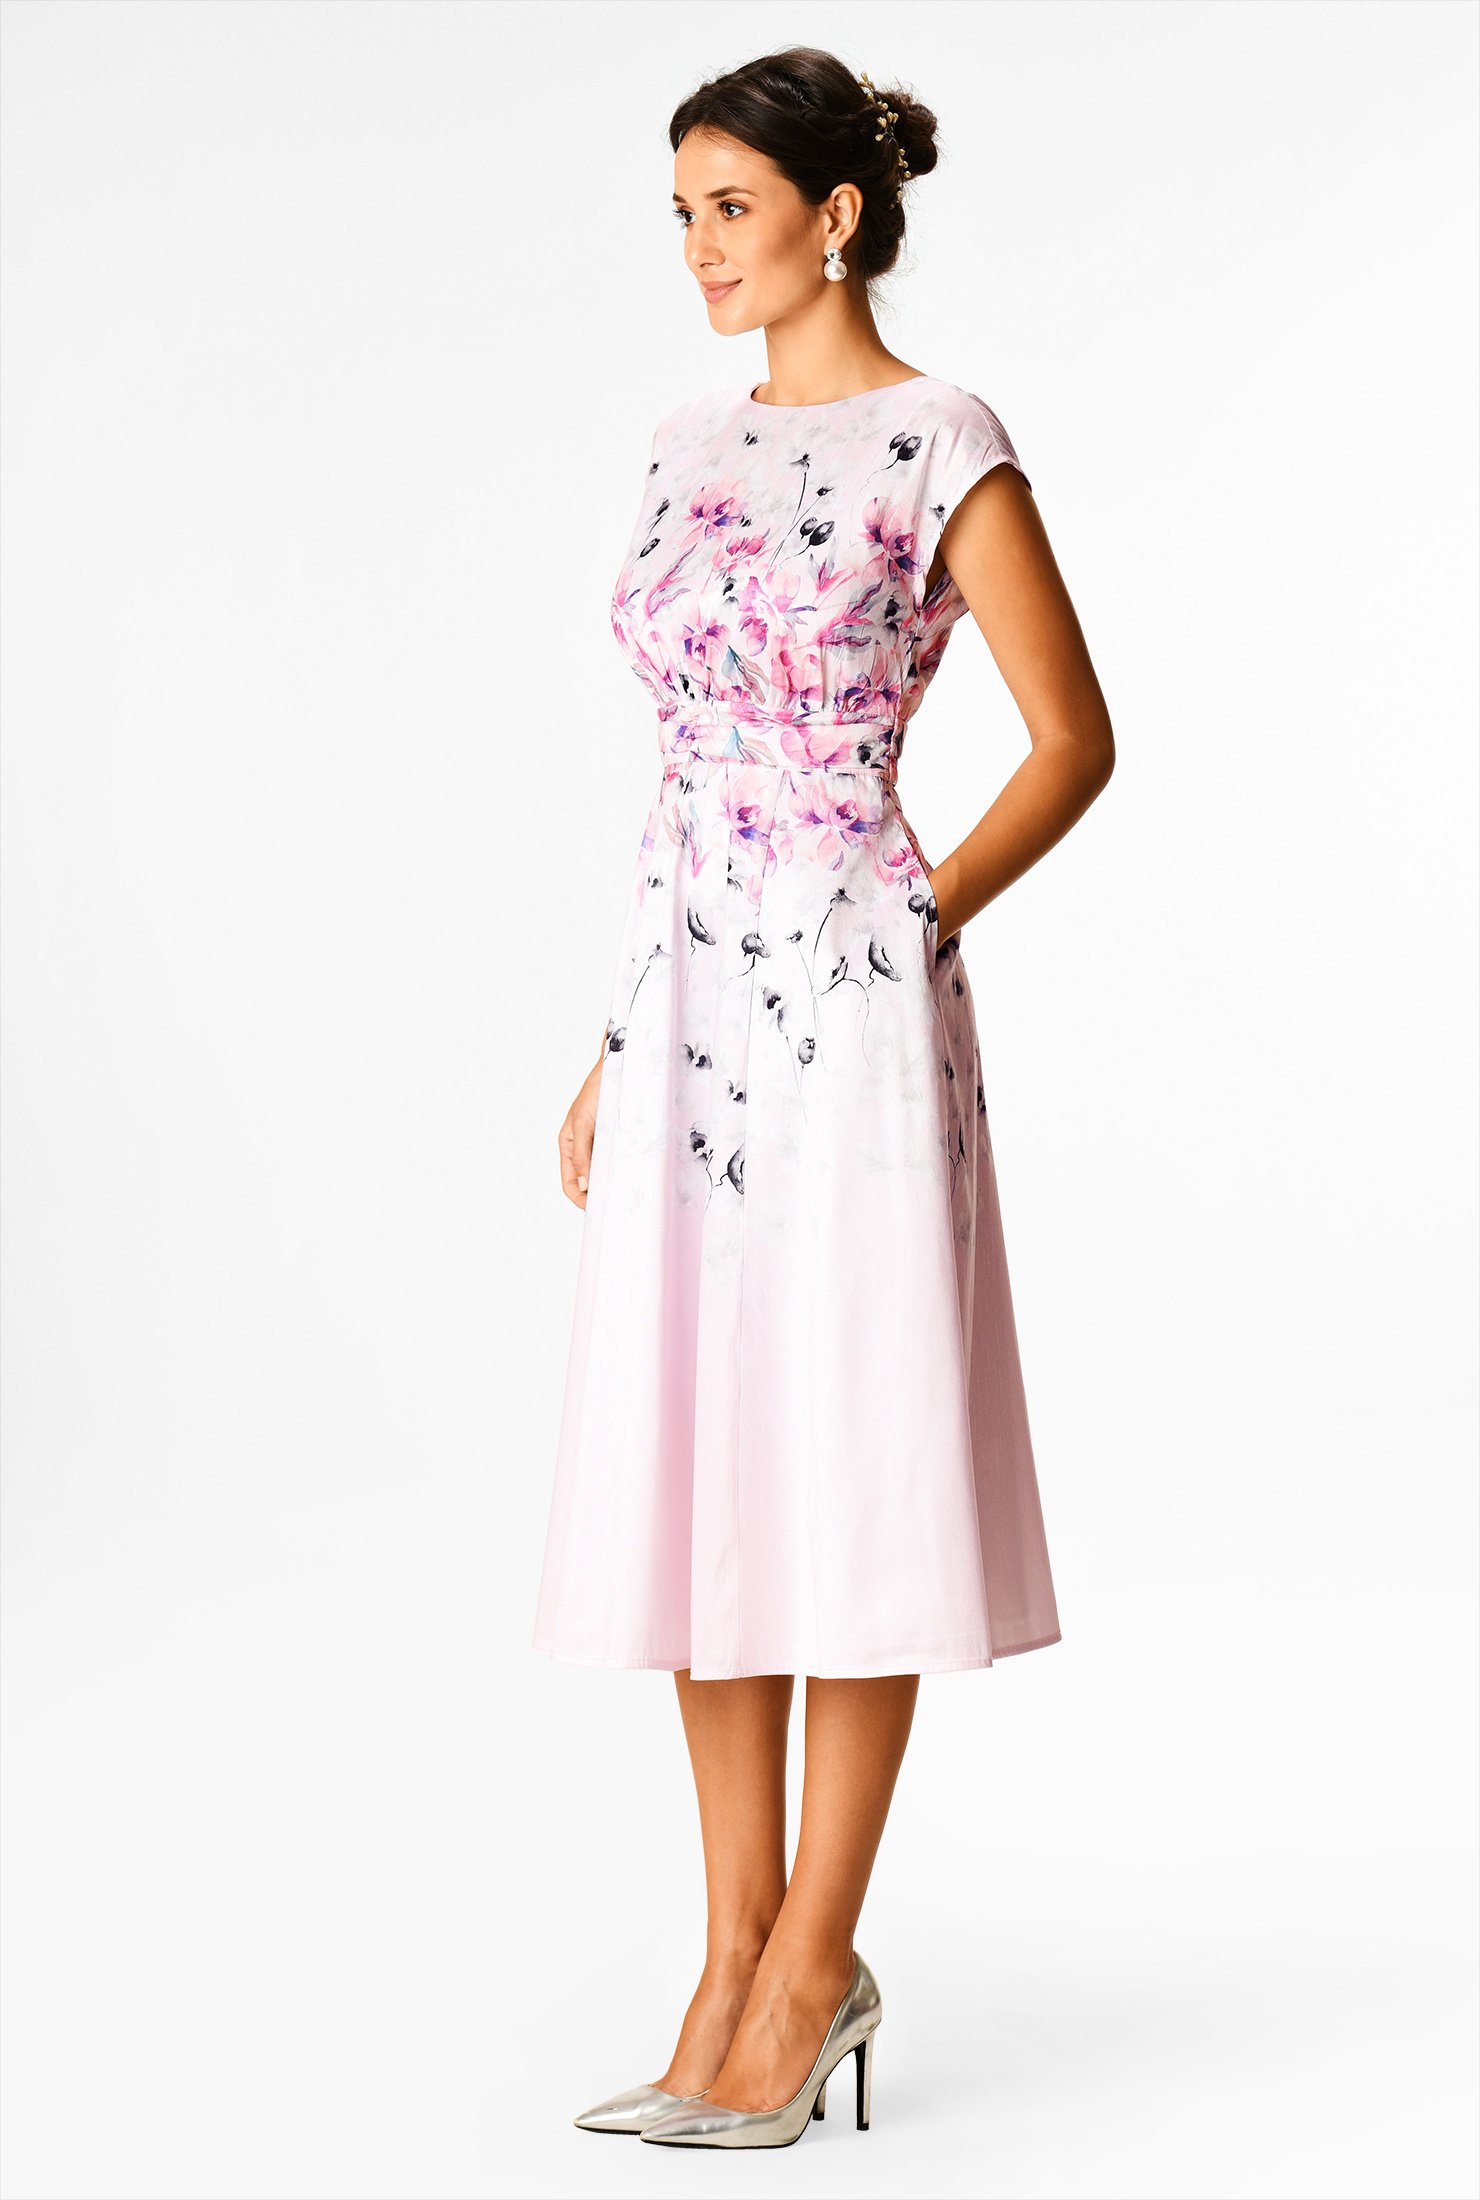 Shop Floral print dupioni pleated empire dress | eShakti